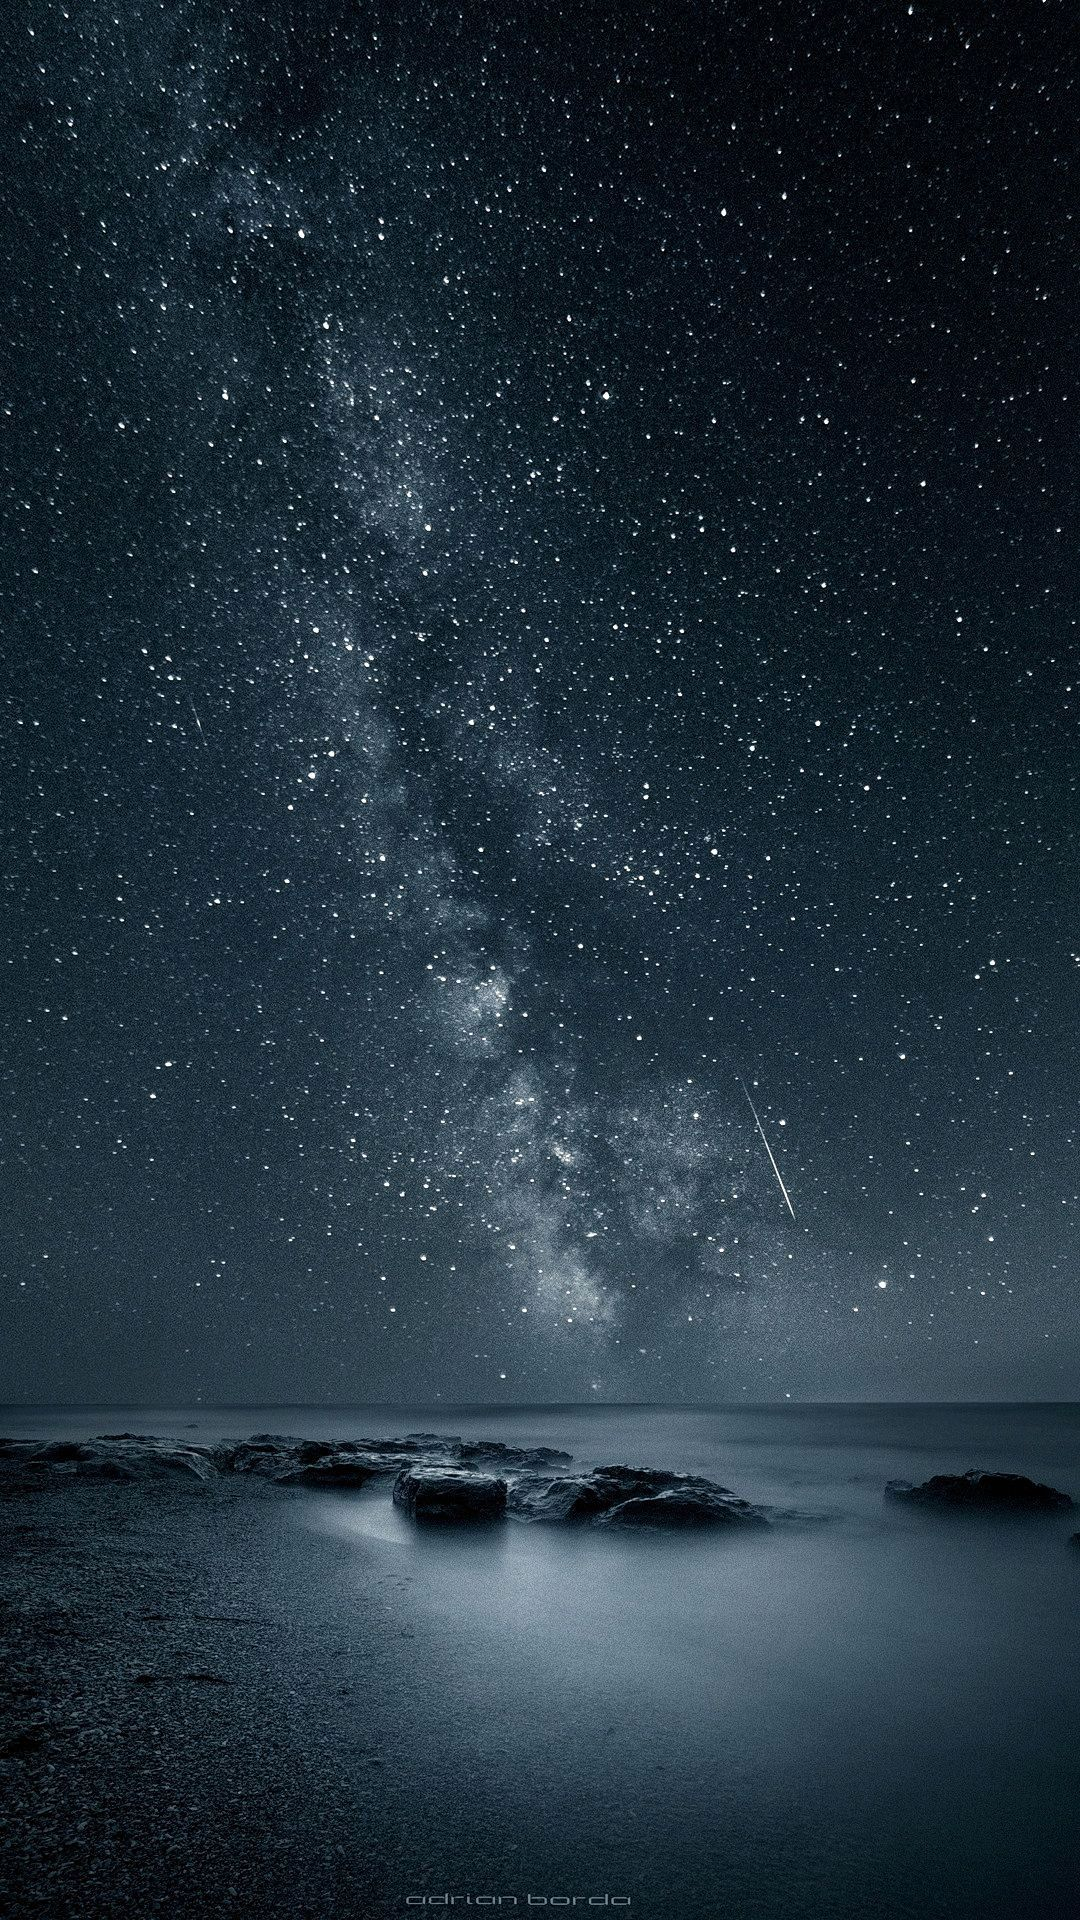 1080x1920 Starry night sea | Infinity wallpaper, Wallpaper space, Night sky wallpaper